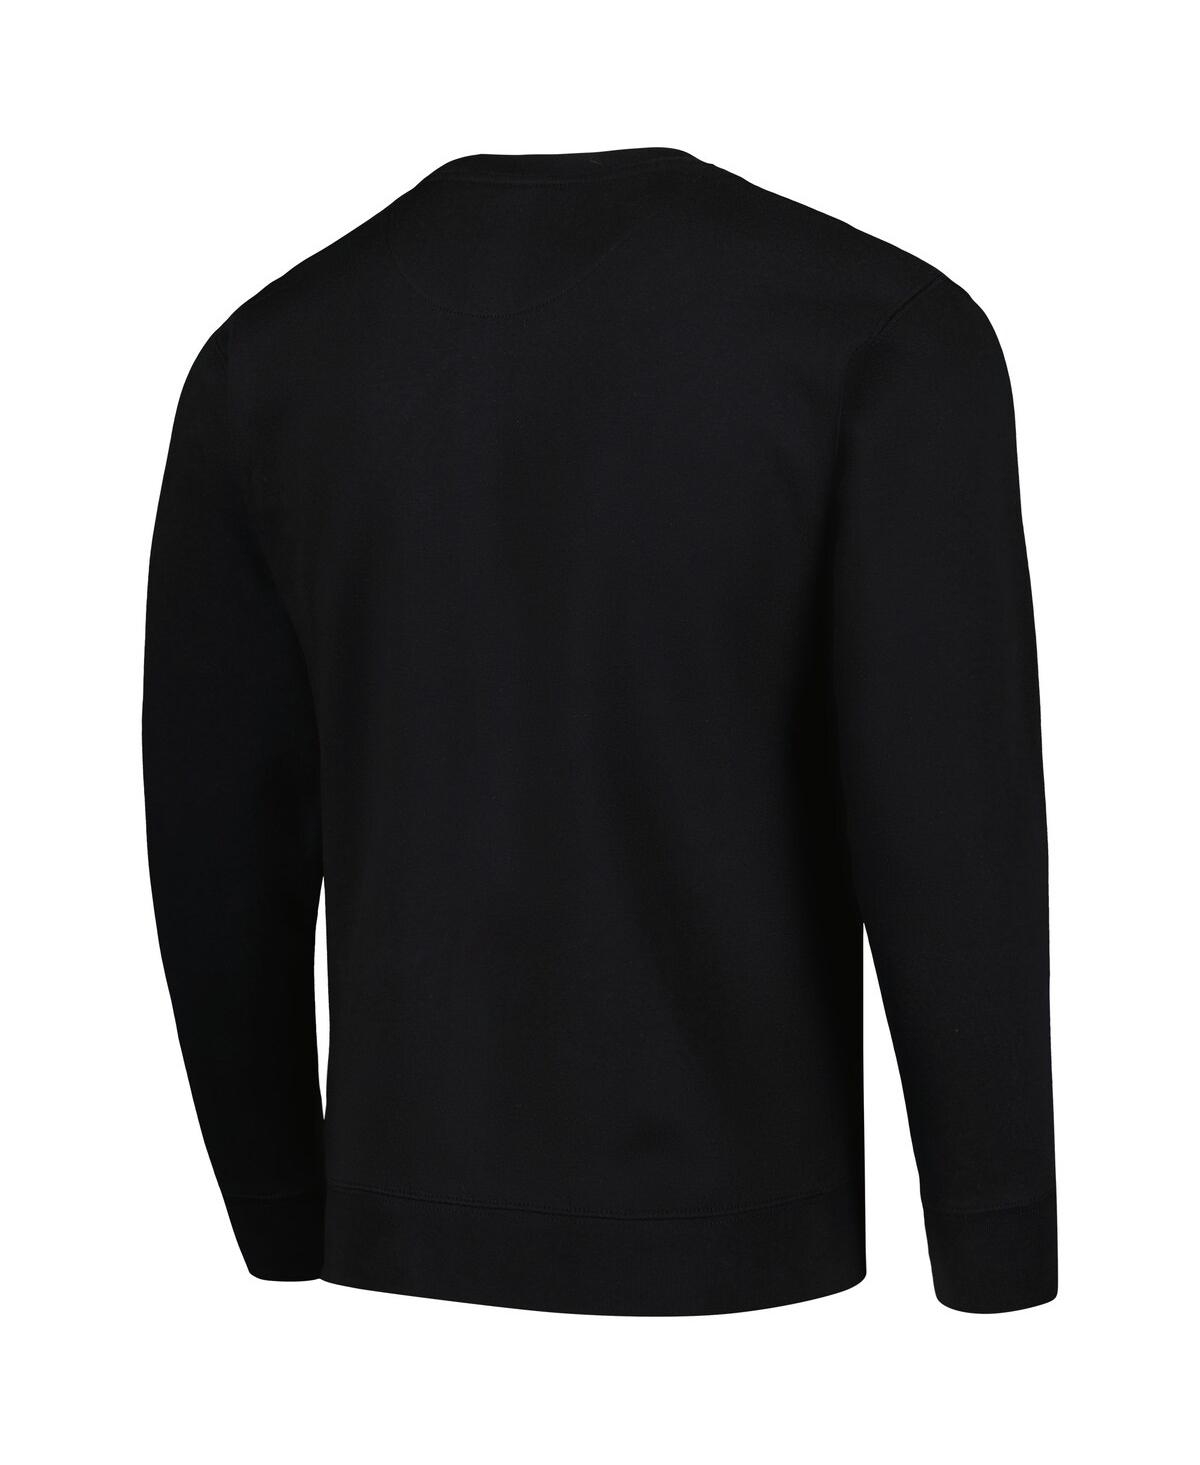 Shop American Classics Men's Black Pink Floyd Moon Pullover Sweatshirt